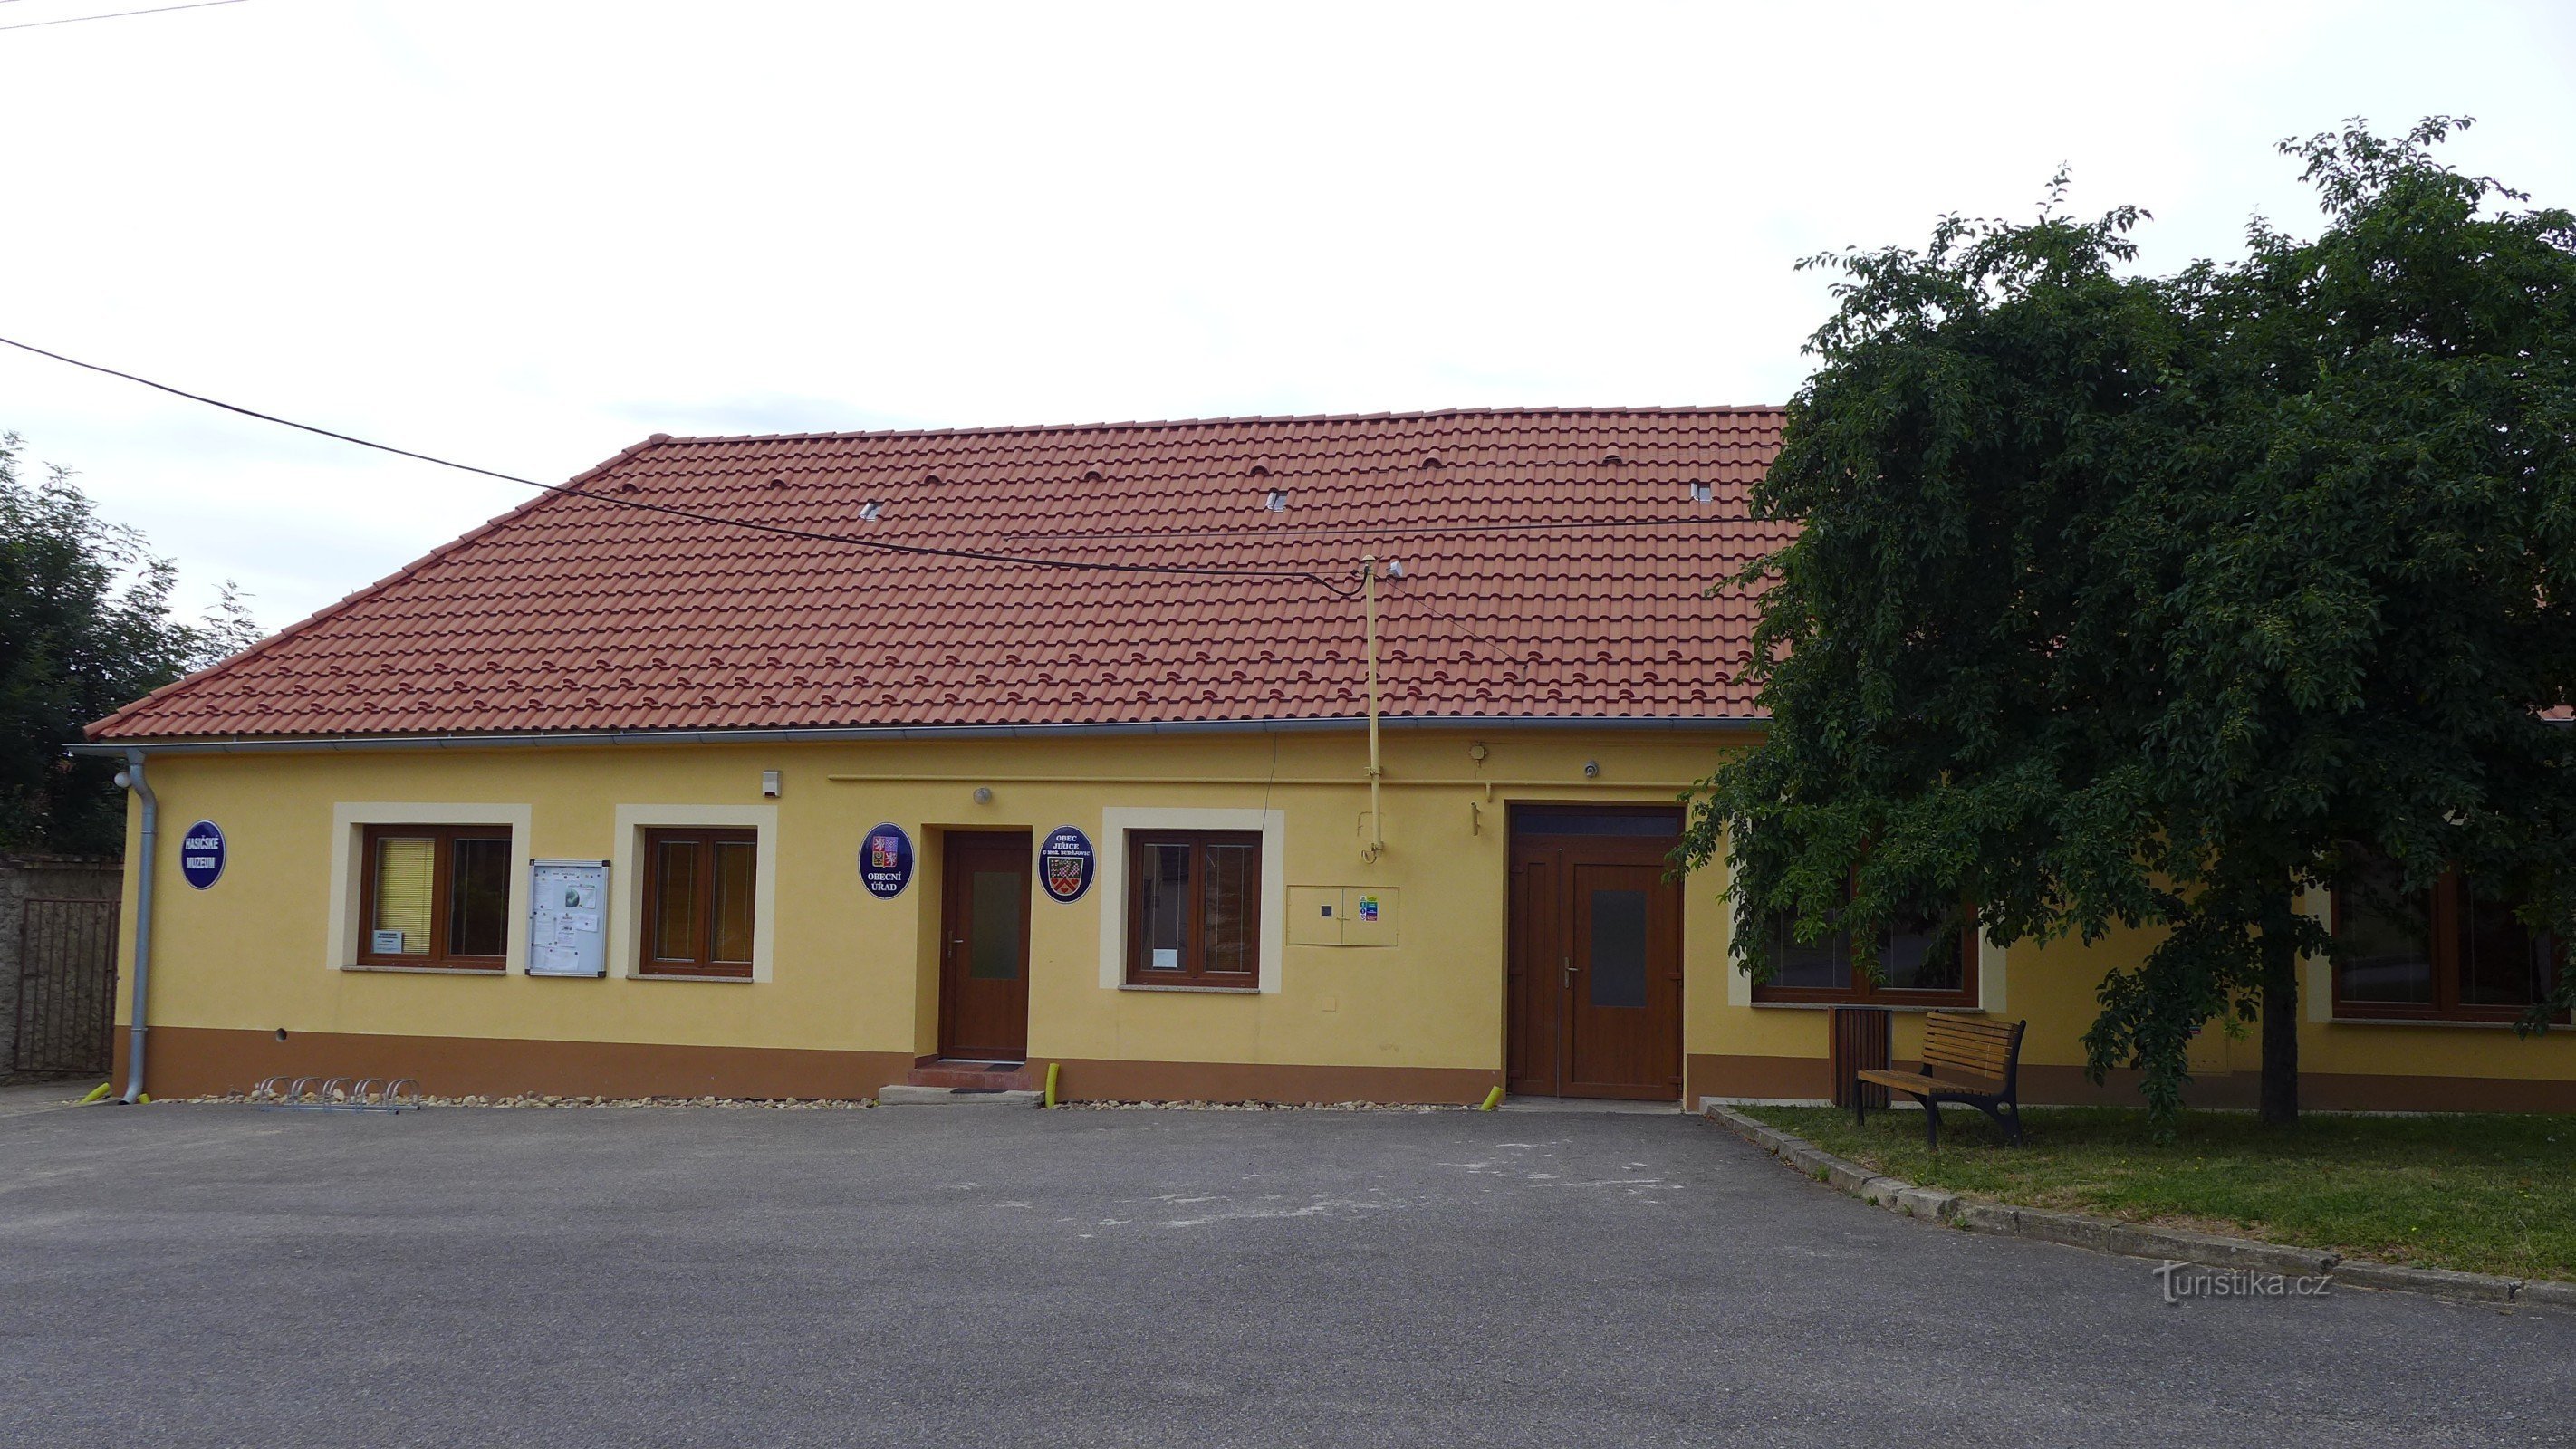 Jiřice perto de Moravské Budějovice: escritório municipal